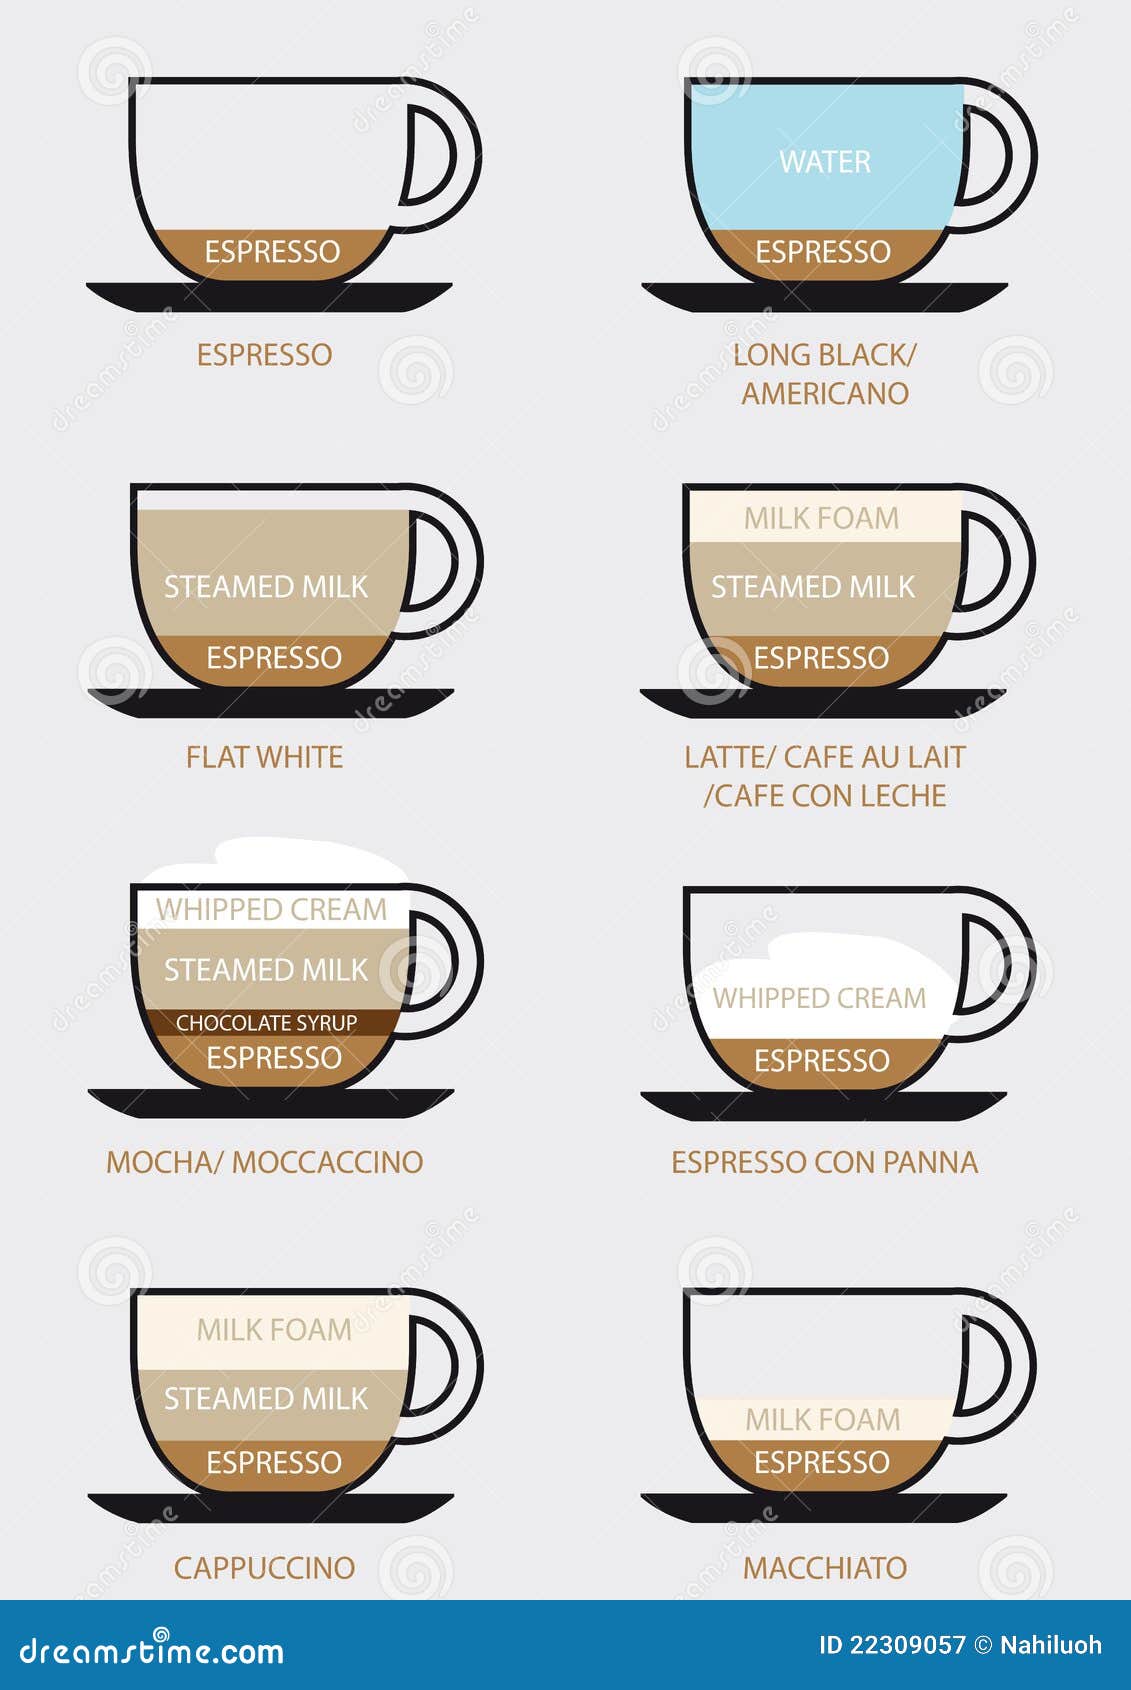 Coffee Types Chart Australia